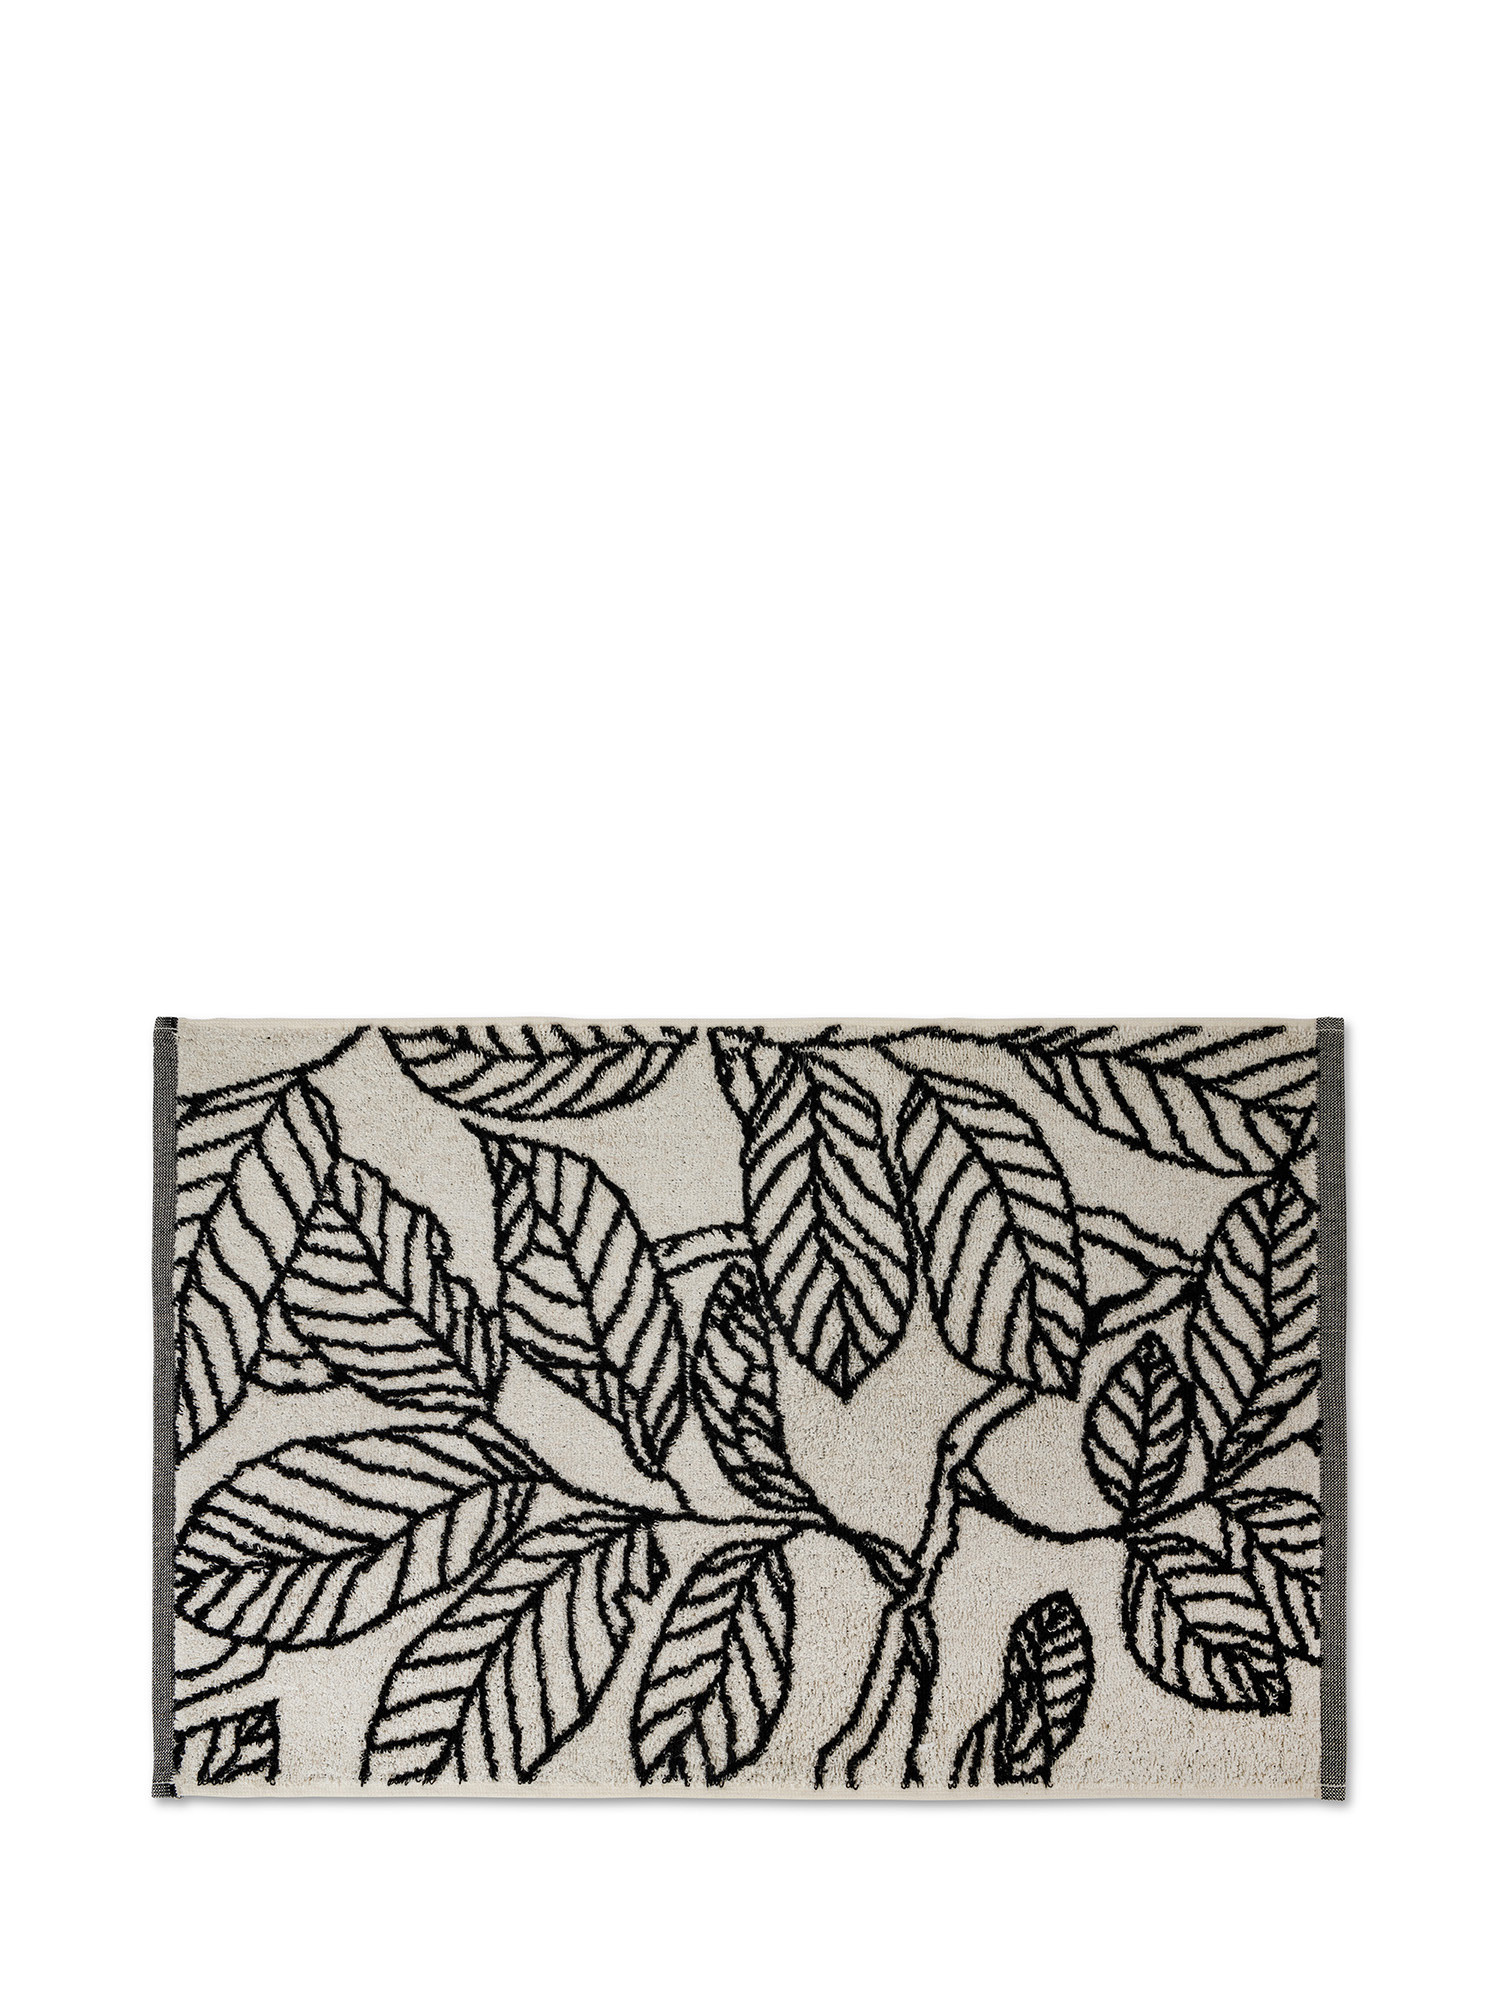 Asciugamano misto lino e cotone motivo foliage, Nero, large image number 1